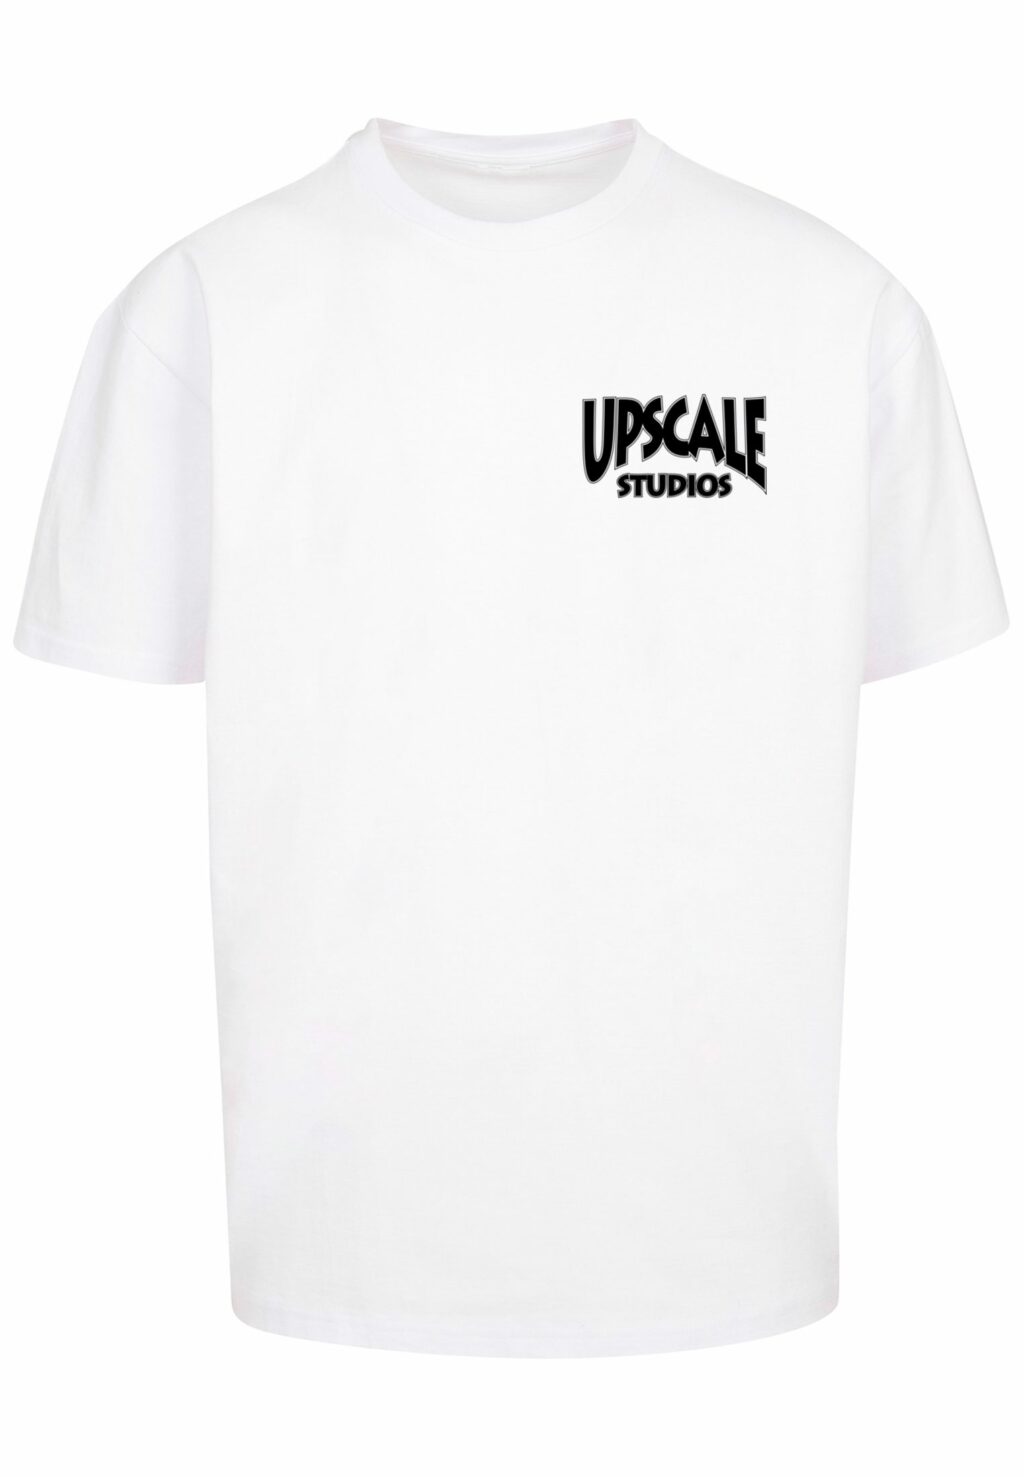 Upscale Studios Oversize Tee white MT2863